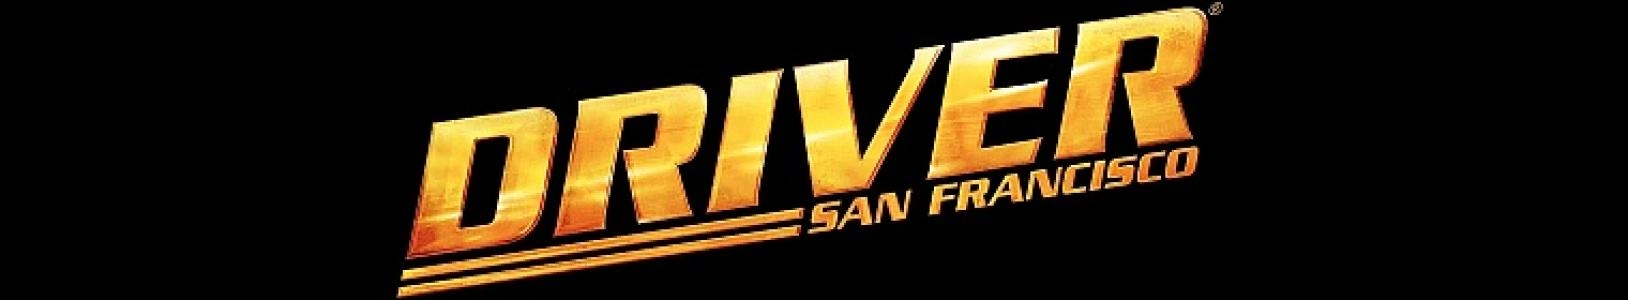 Driver: San Francisco banner